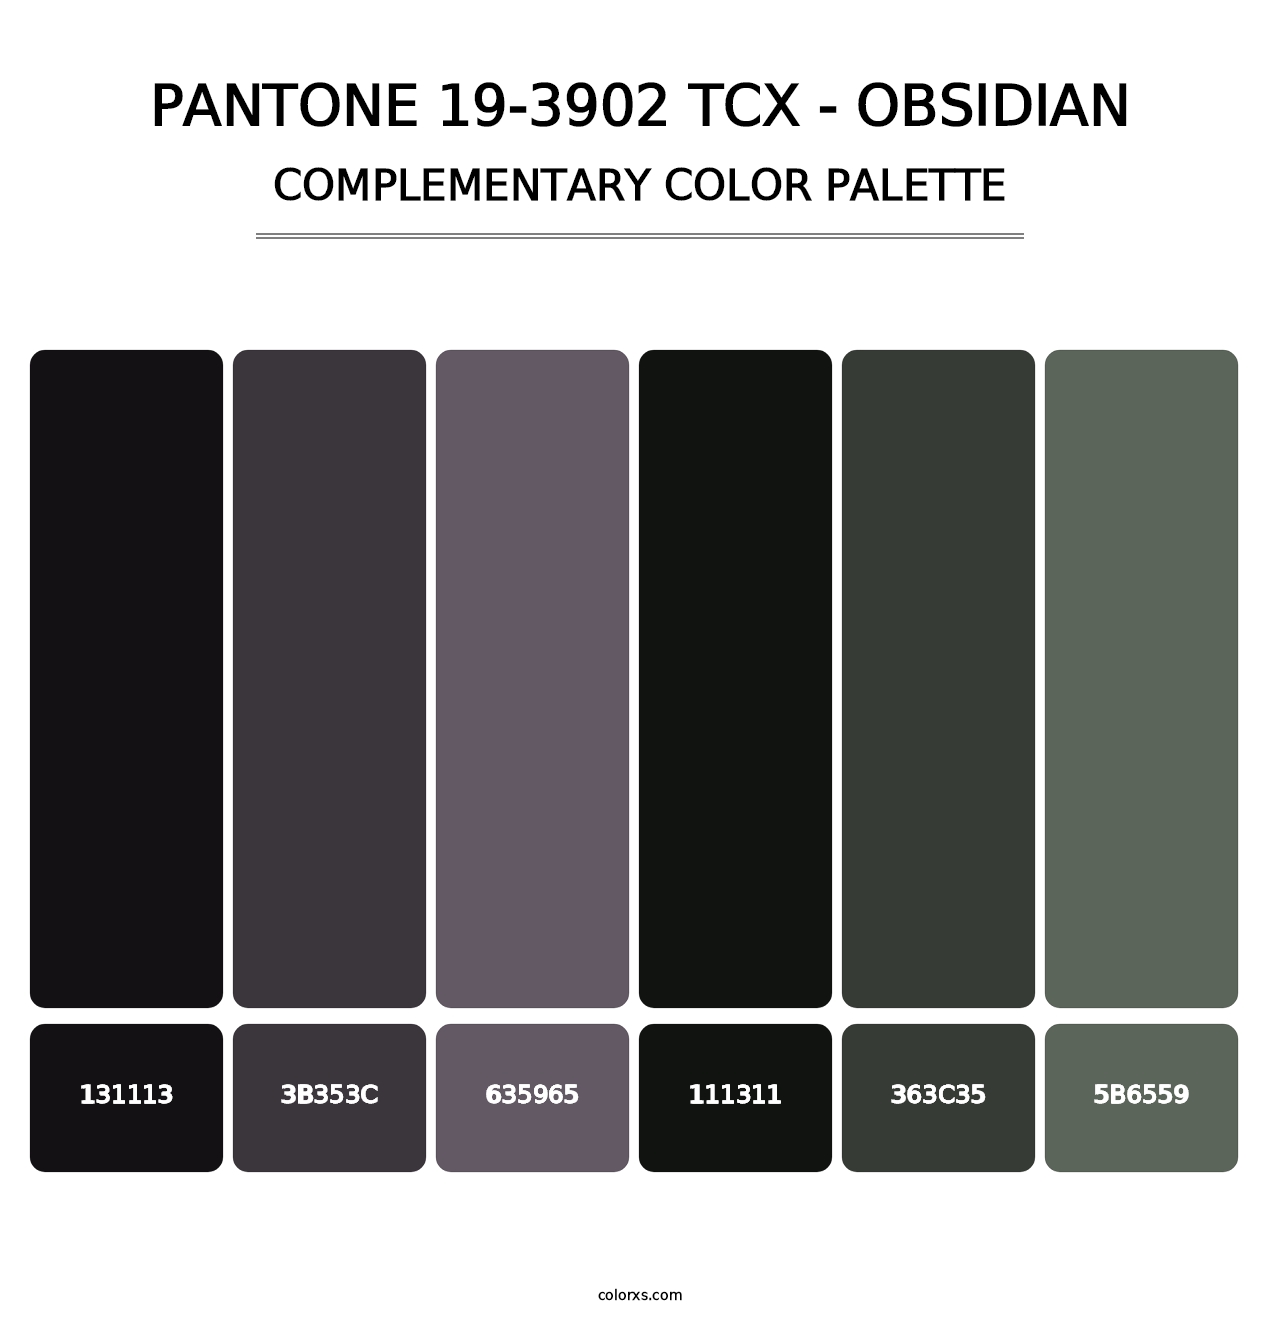 PANTONE 19-3902 TCX - Obsidian - Complementary Color Palette